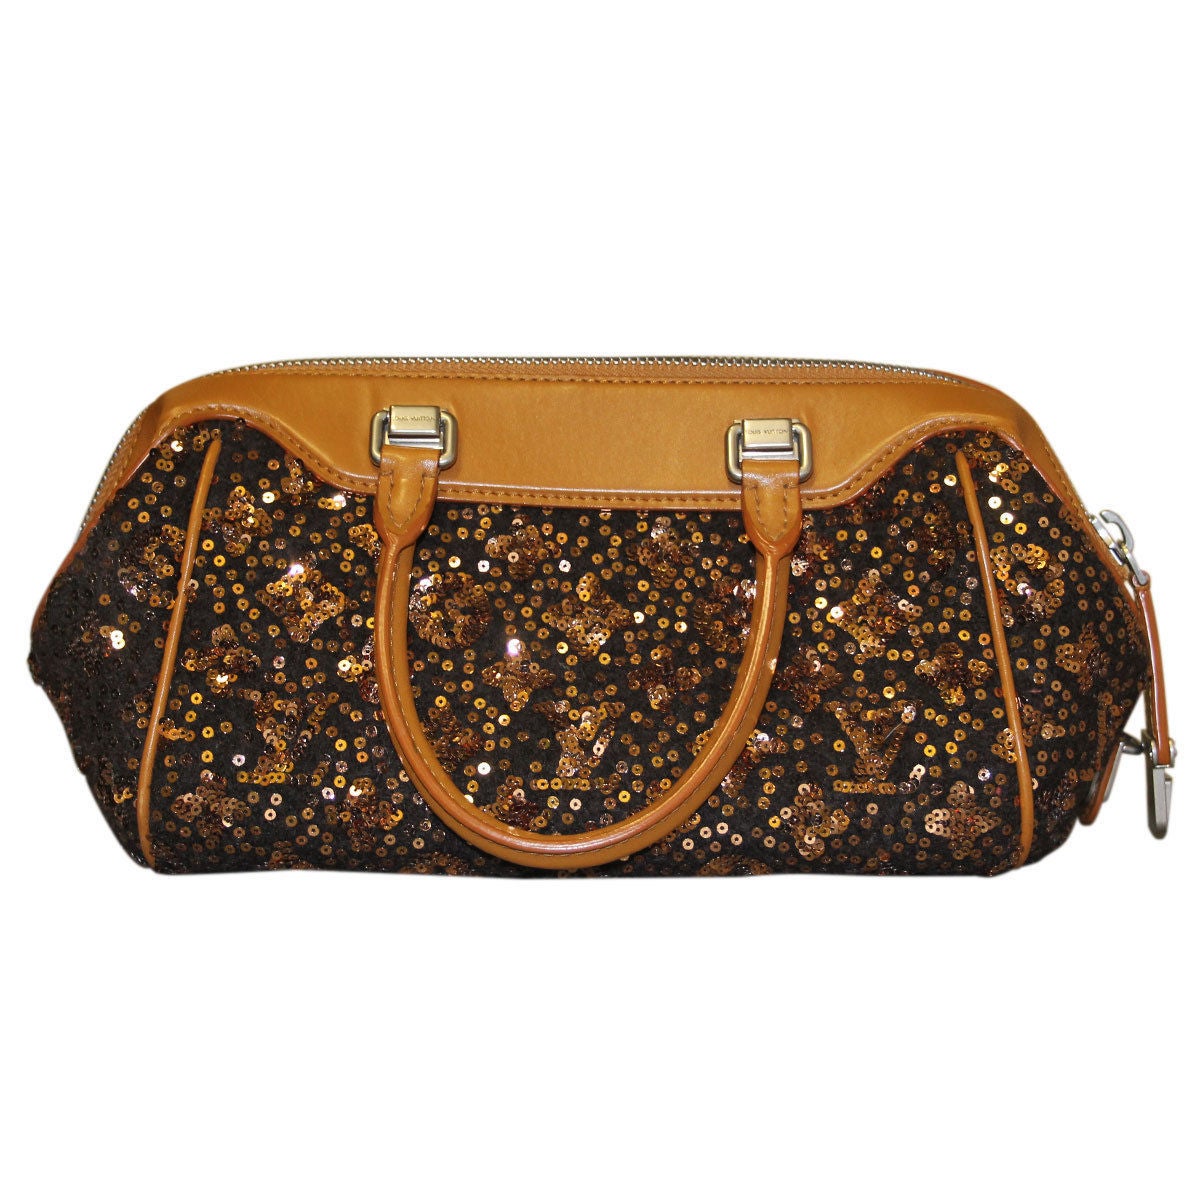 Brand: Louis Vuitton
Style: Handbag
Handles: Caramel Leather Rolled Handles
Measurements: 6